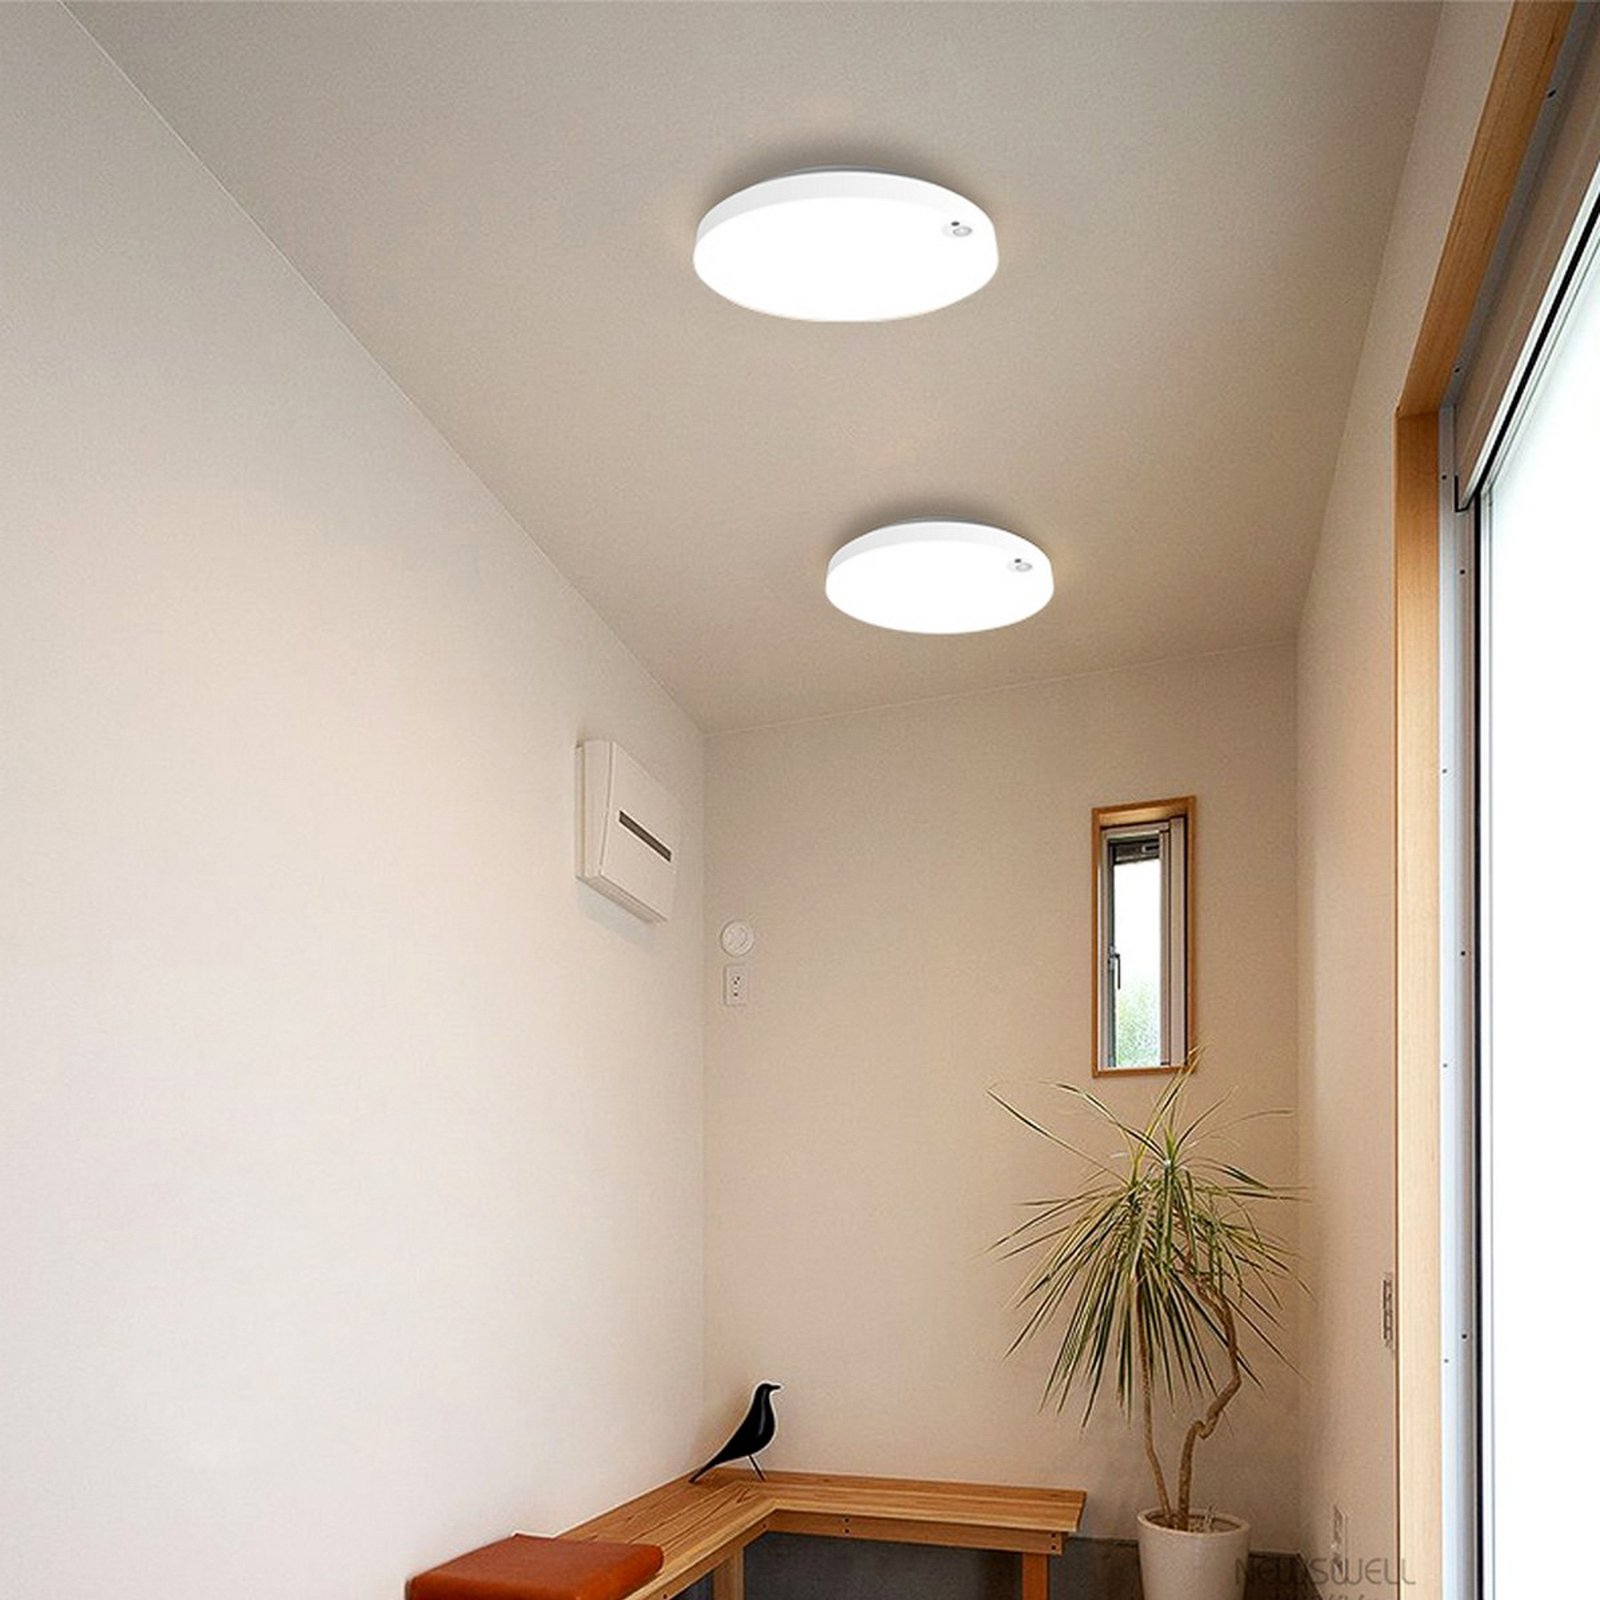 LED ceiling lamp Allrounder 1, adjustable light colour, sensor